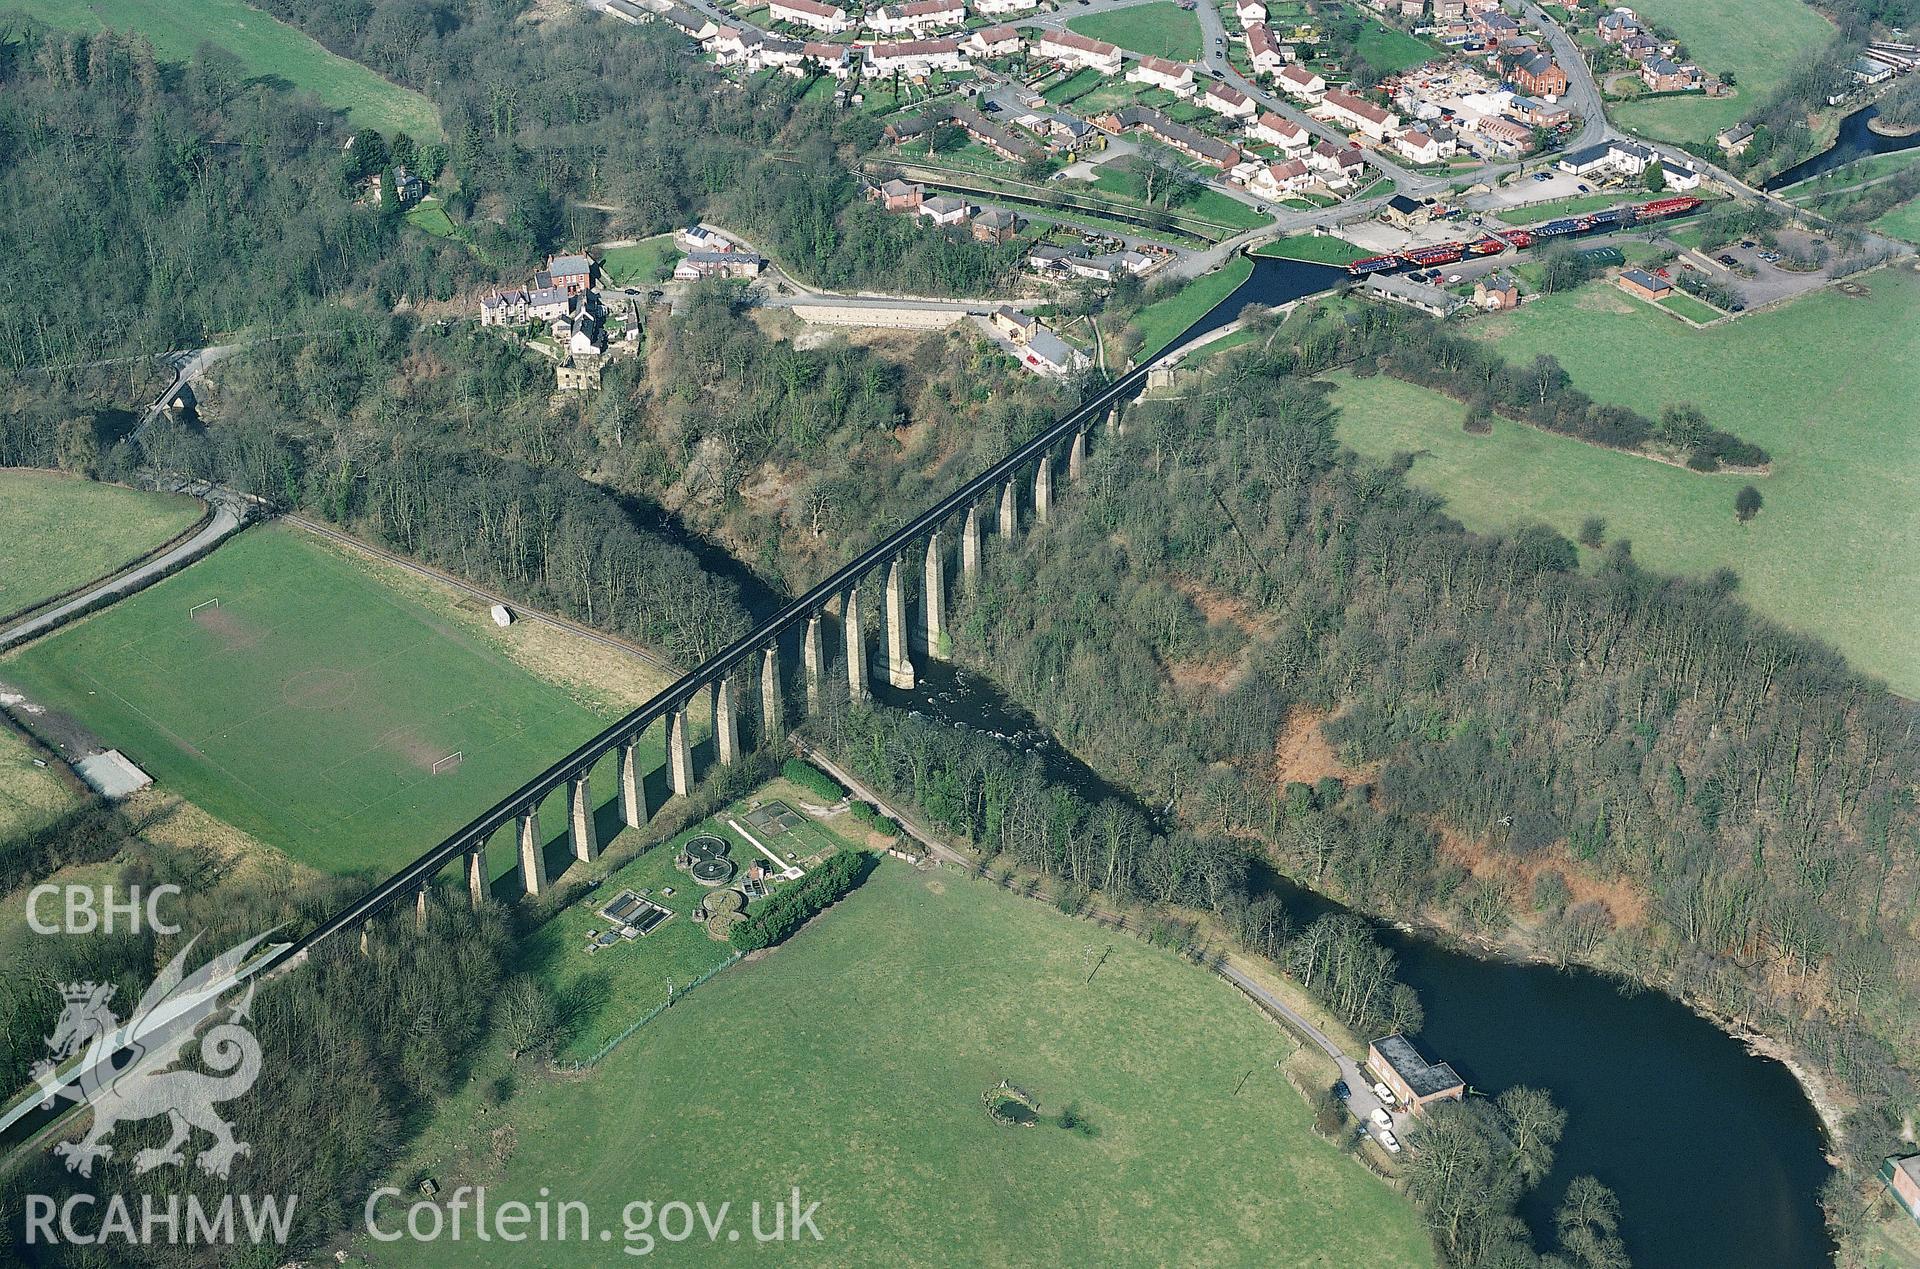 Slide of RCAHMW colour oblique aerial photograph of Pontcysyllte Aqueduct, taken by Toby Driver, 2003.